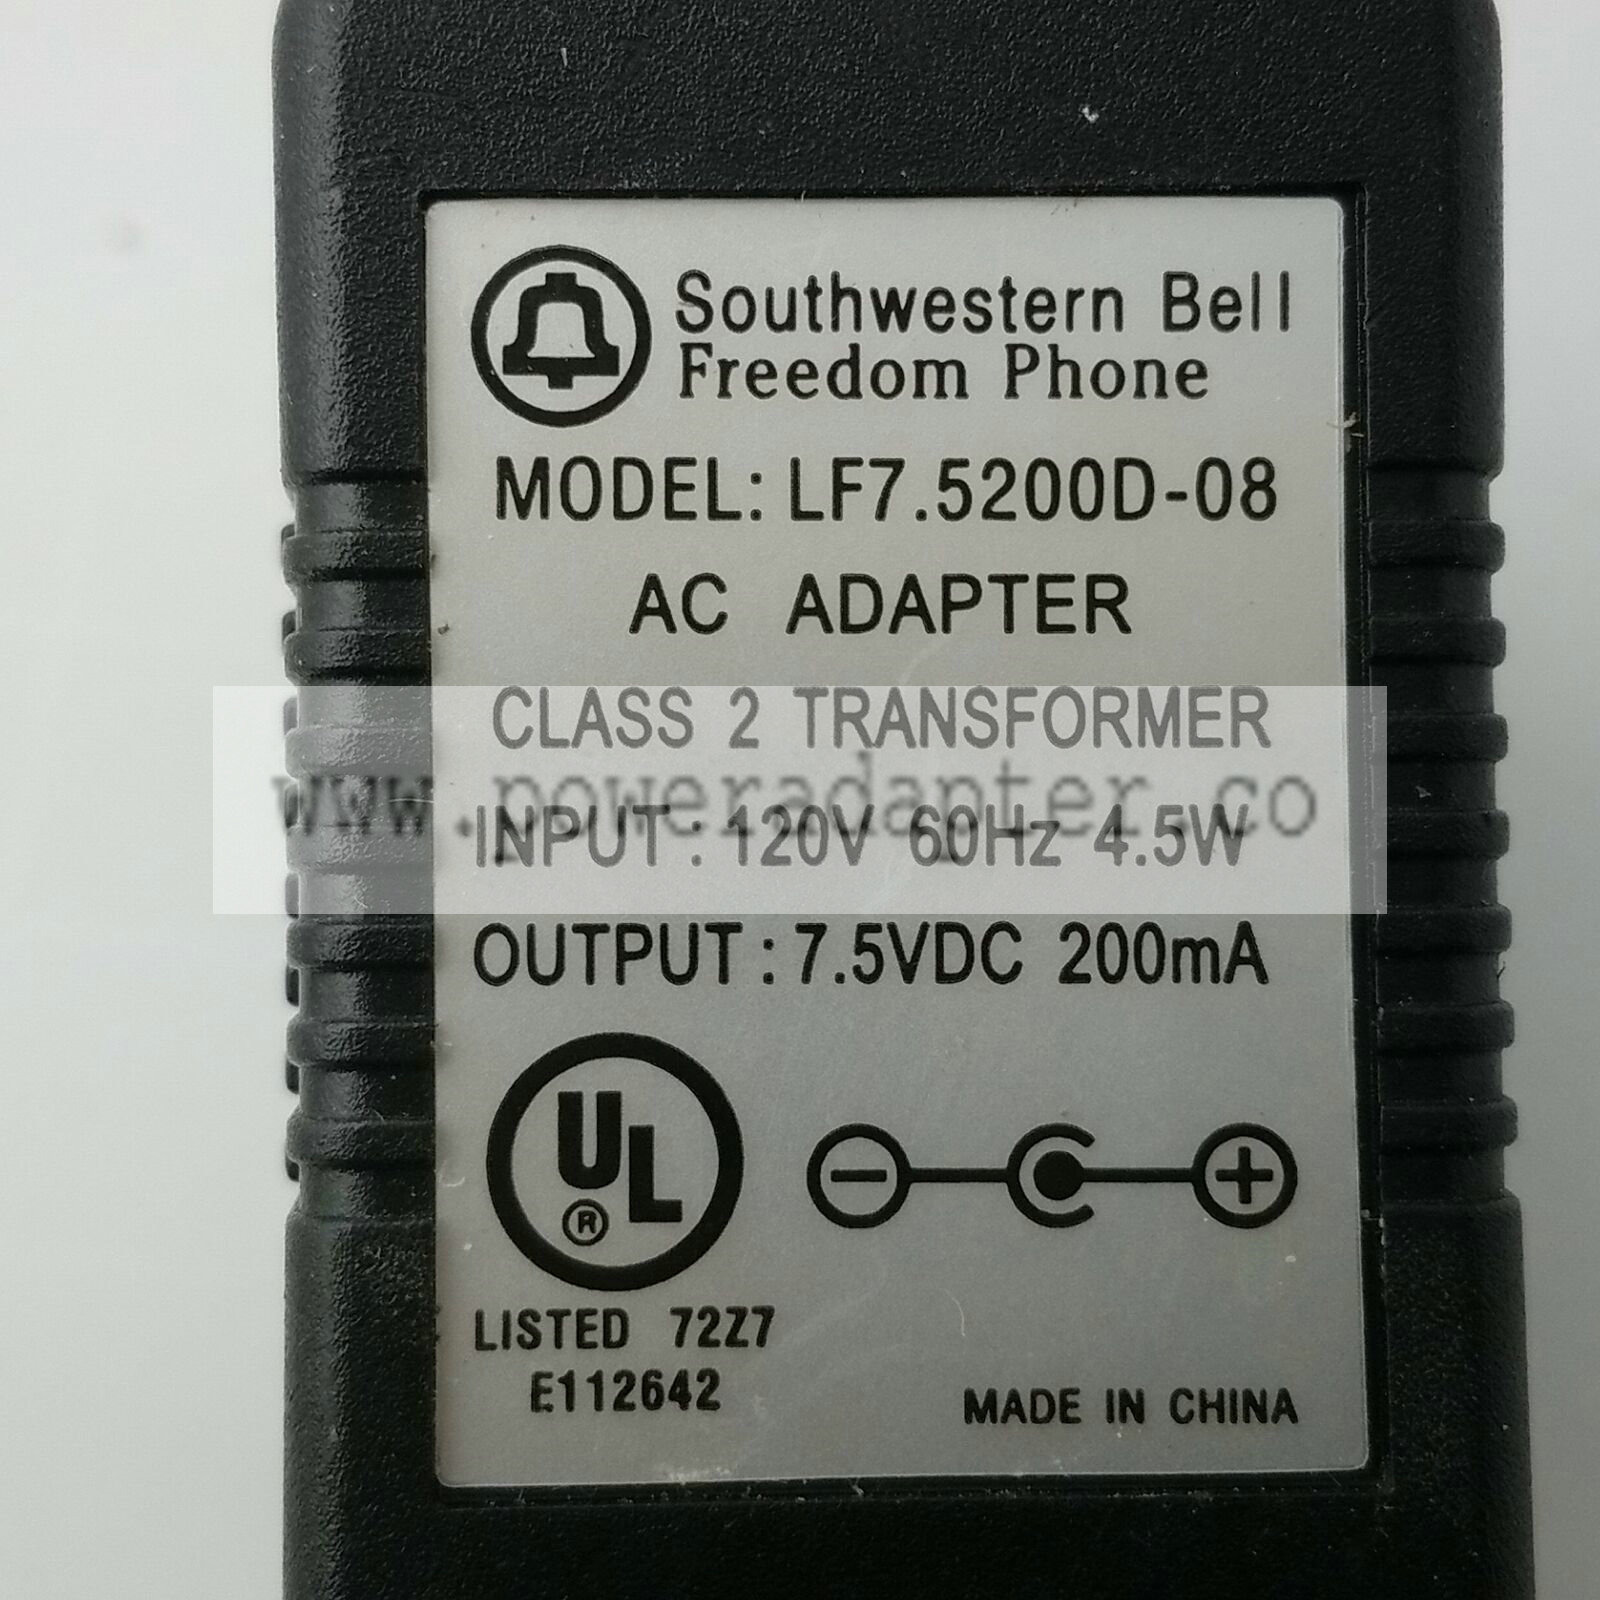 Southwestern Bell Freedom Phone Model LF7.5200D-8 AC Adapter Output 7.5VDC 200mA Brand: Southwestern Bell Freedom